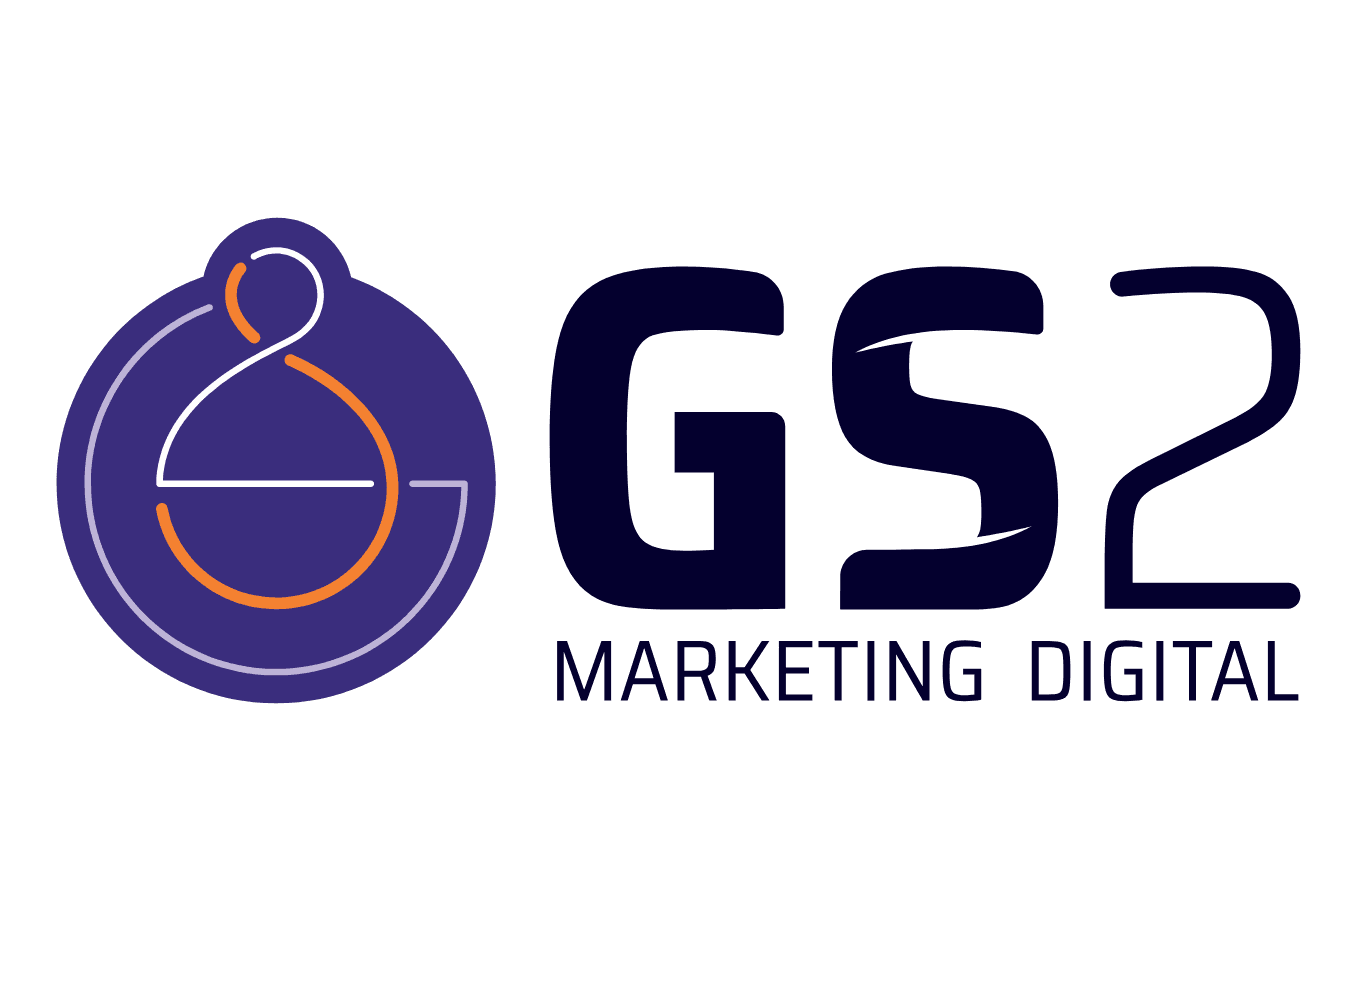 GS2 Marketing